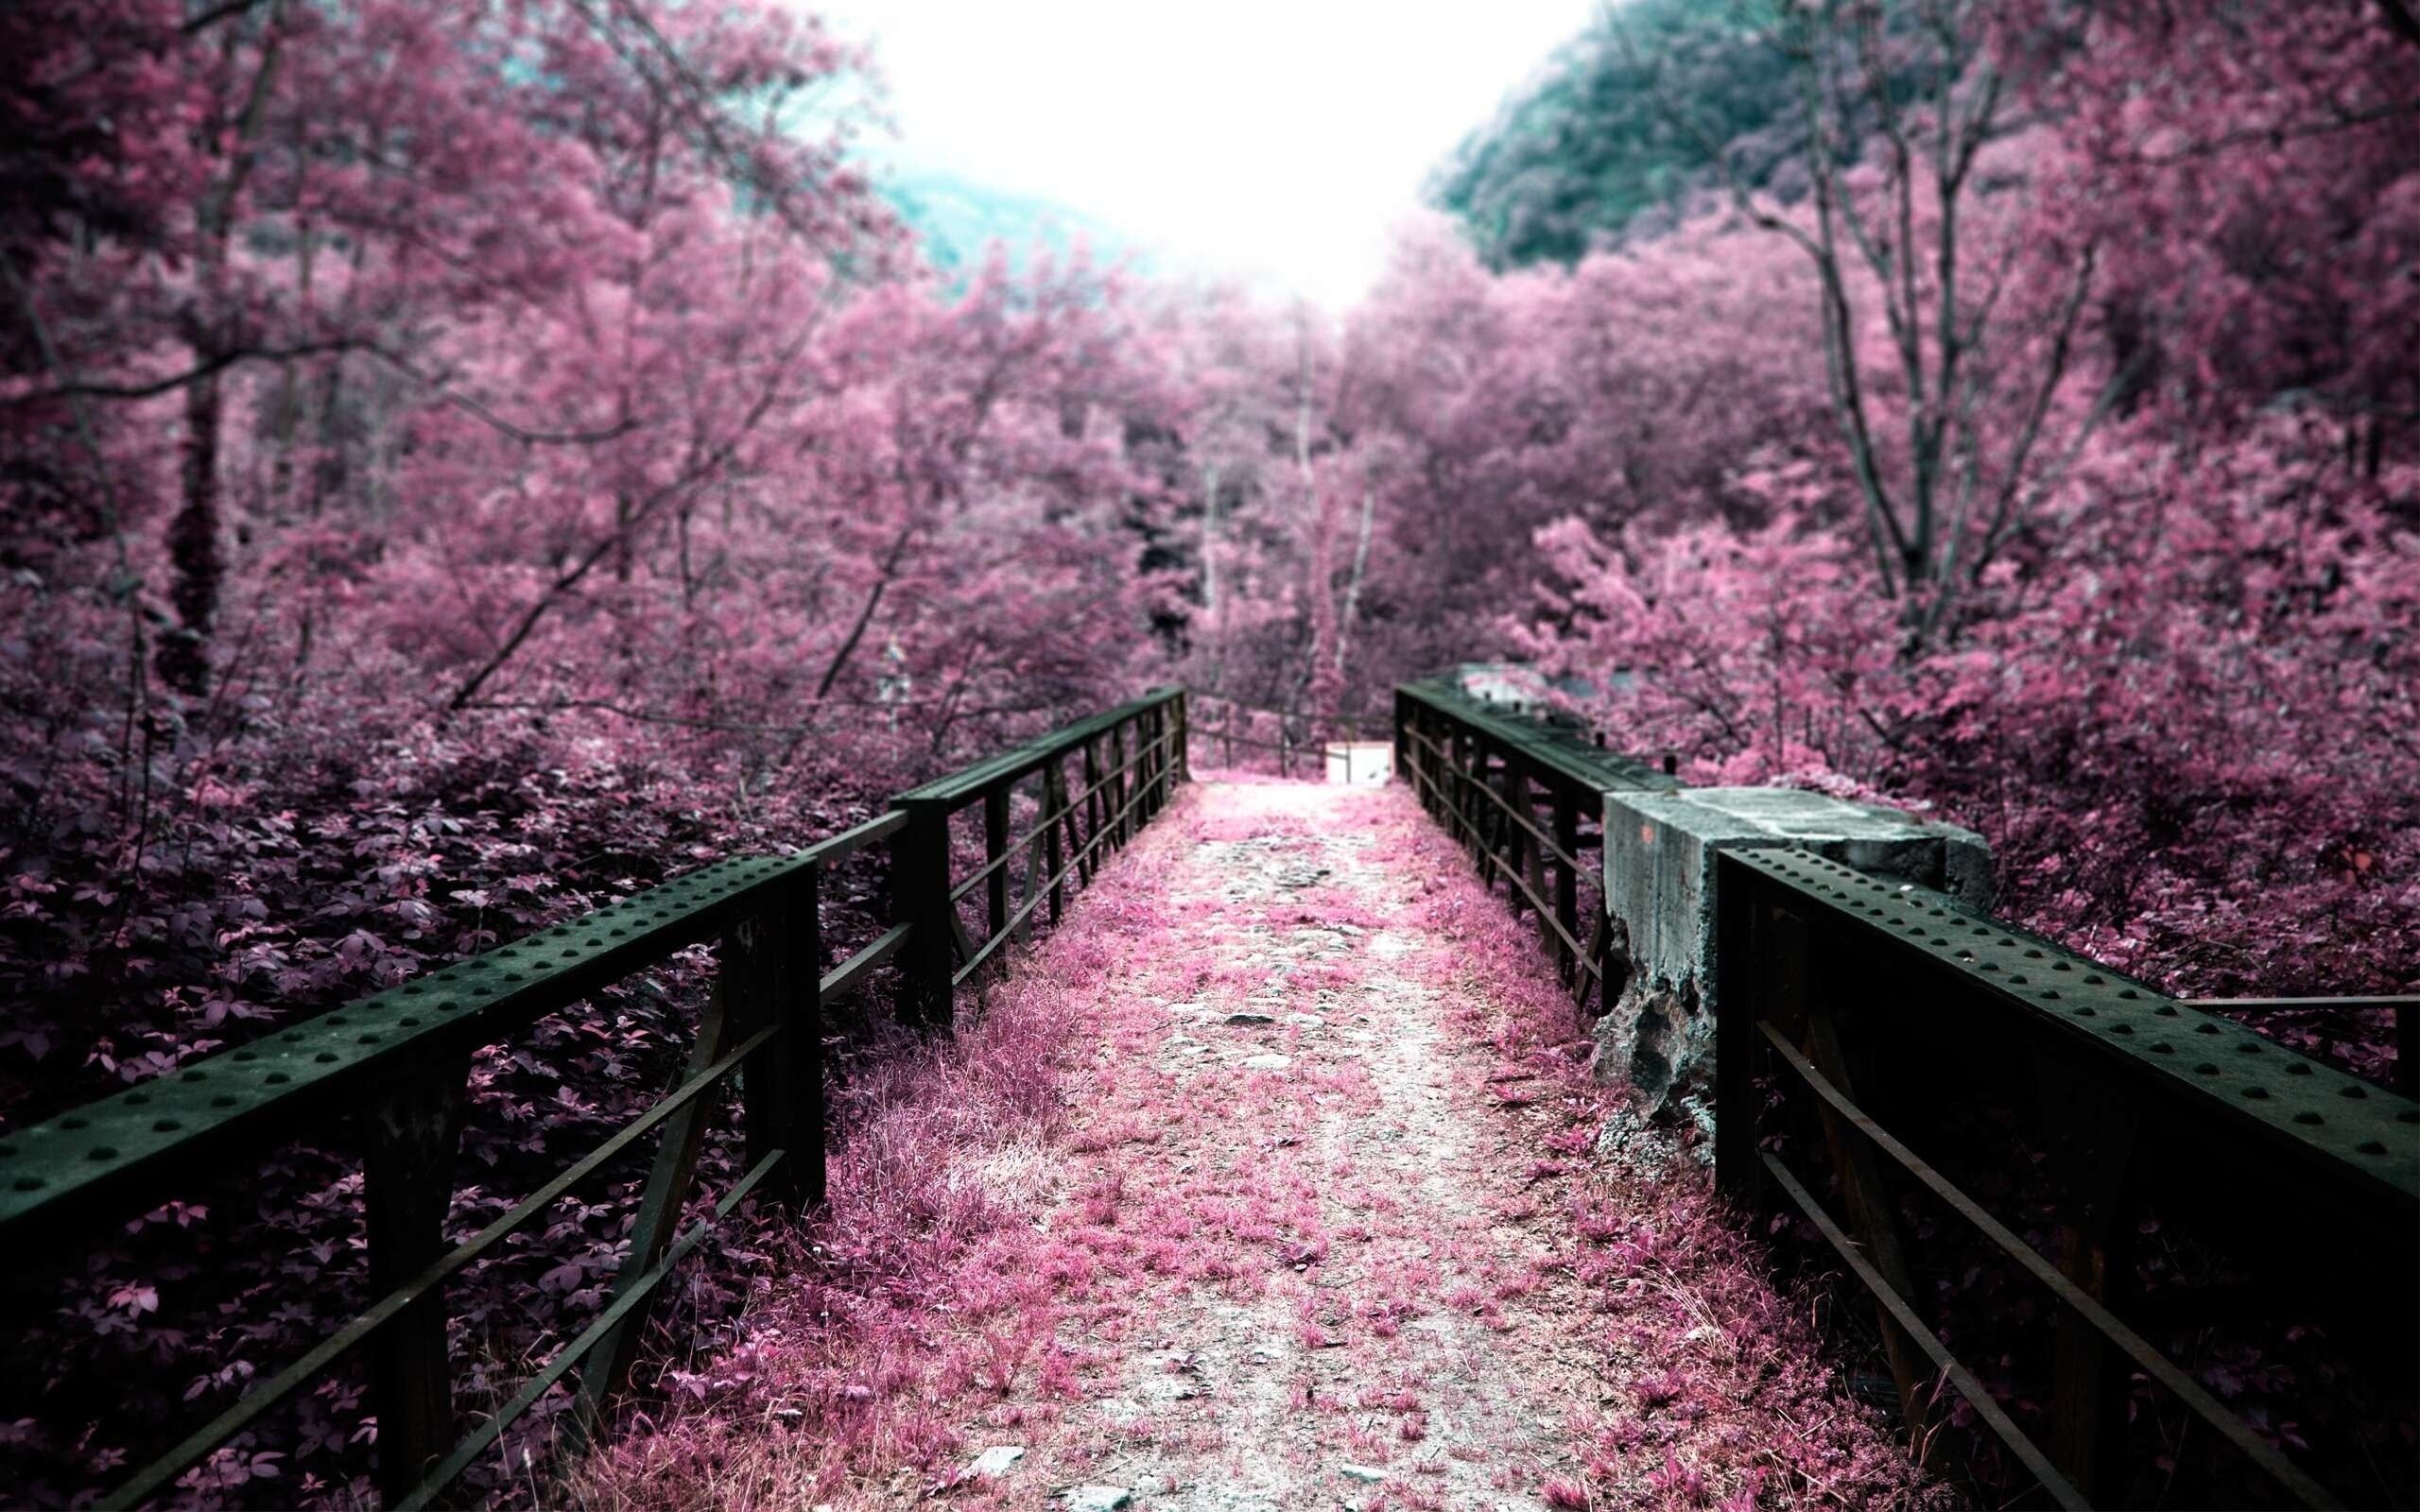 pink cherry blossom tree #pink #bridge #nature cherry blossom #path #landscape #infra. Cherry blossom wallpaper, Anime scenery wallpaper, Pink cherry blossom tree